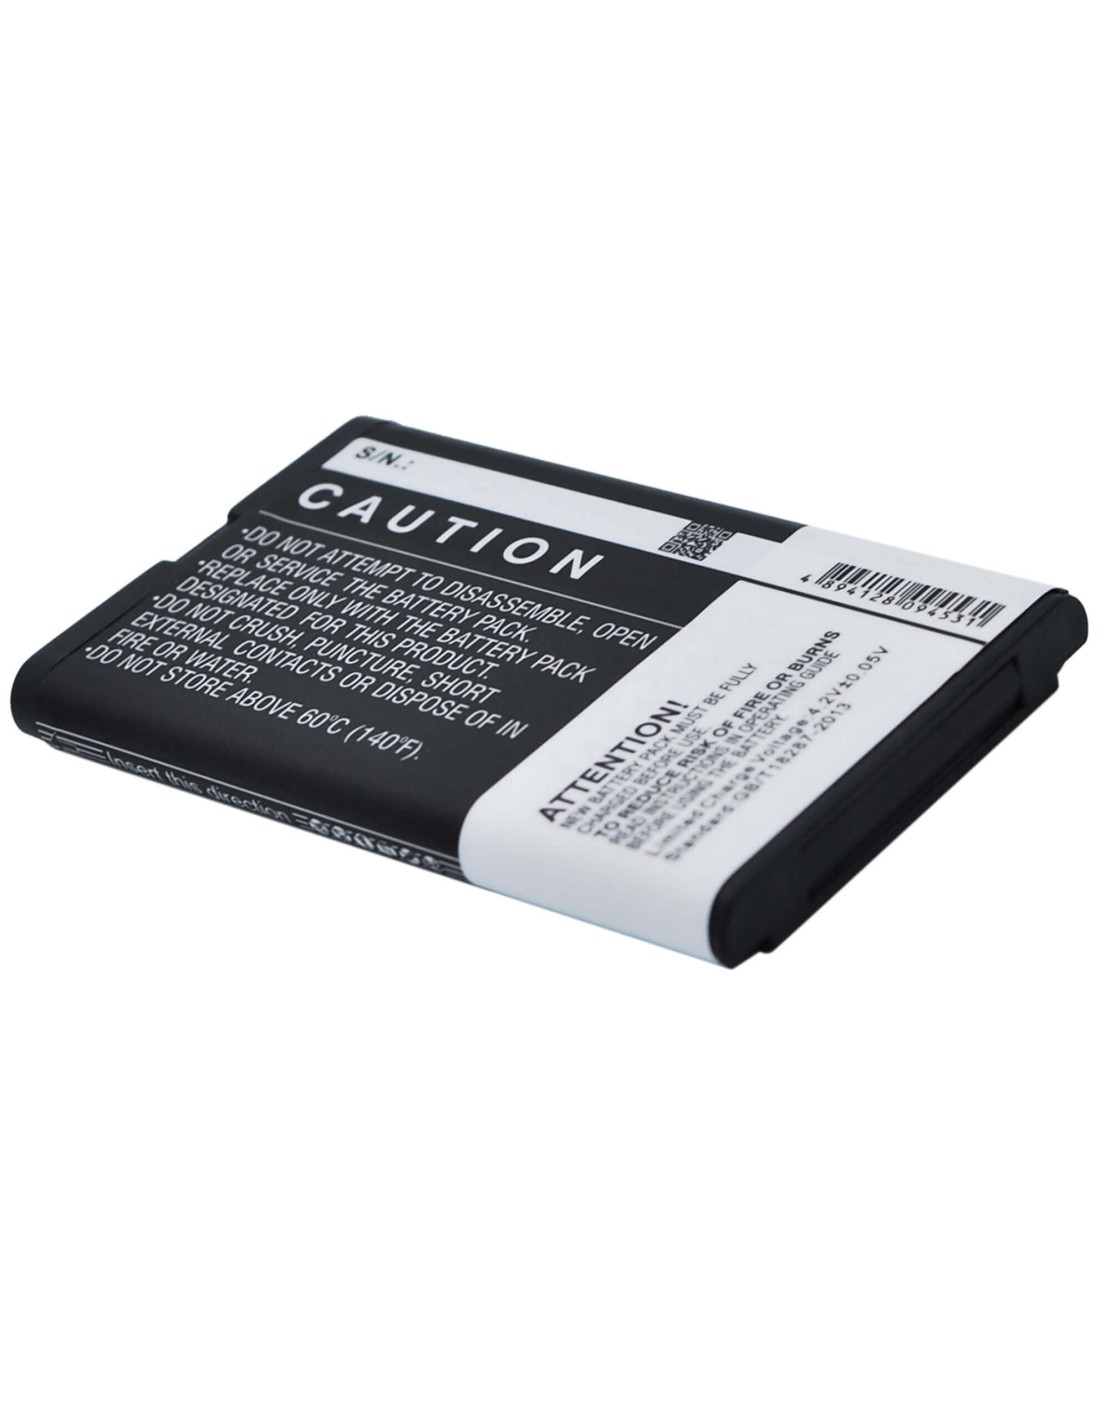 Battery for Philips Pocket Memo Dpm6000, Pocket Memo Dpm7000, Pocket Memo Dpm8000 3.7V, 1250mAh - 4.63Wh